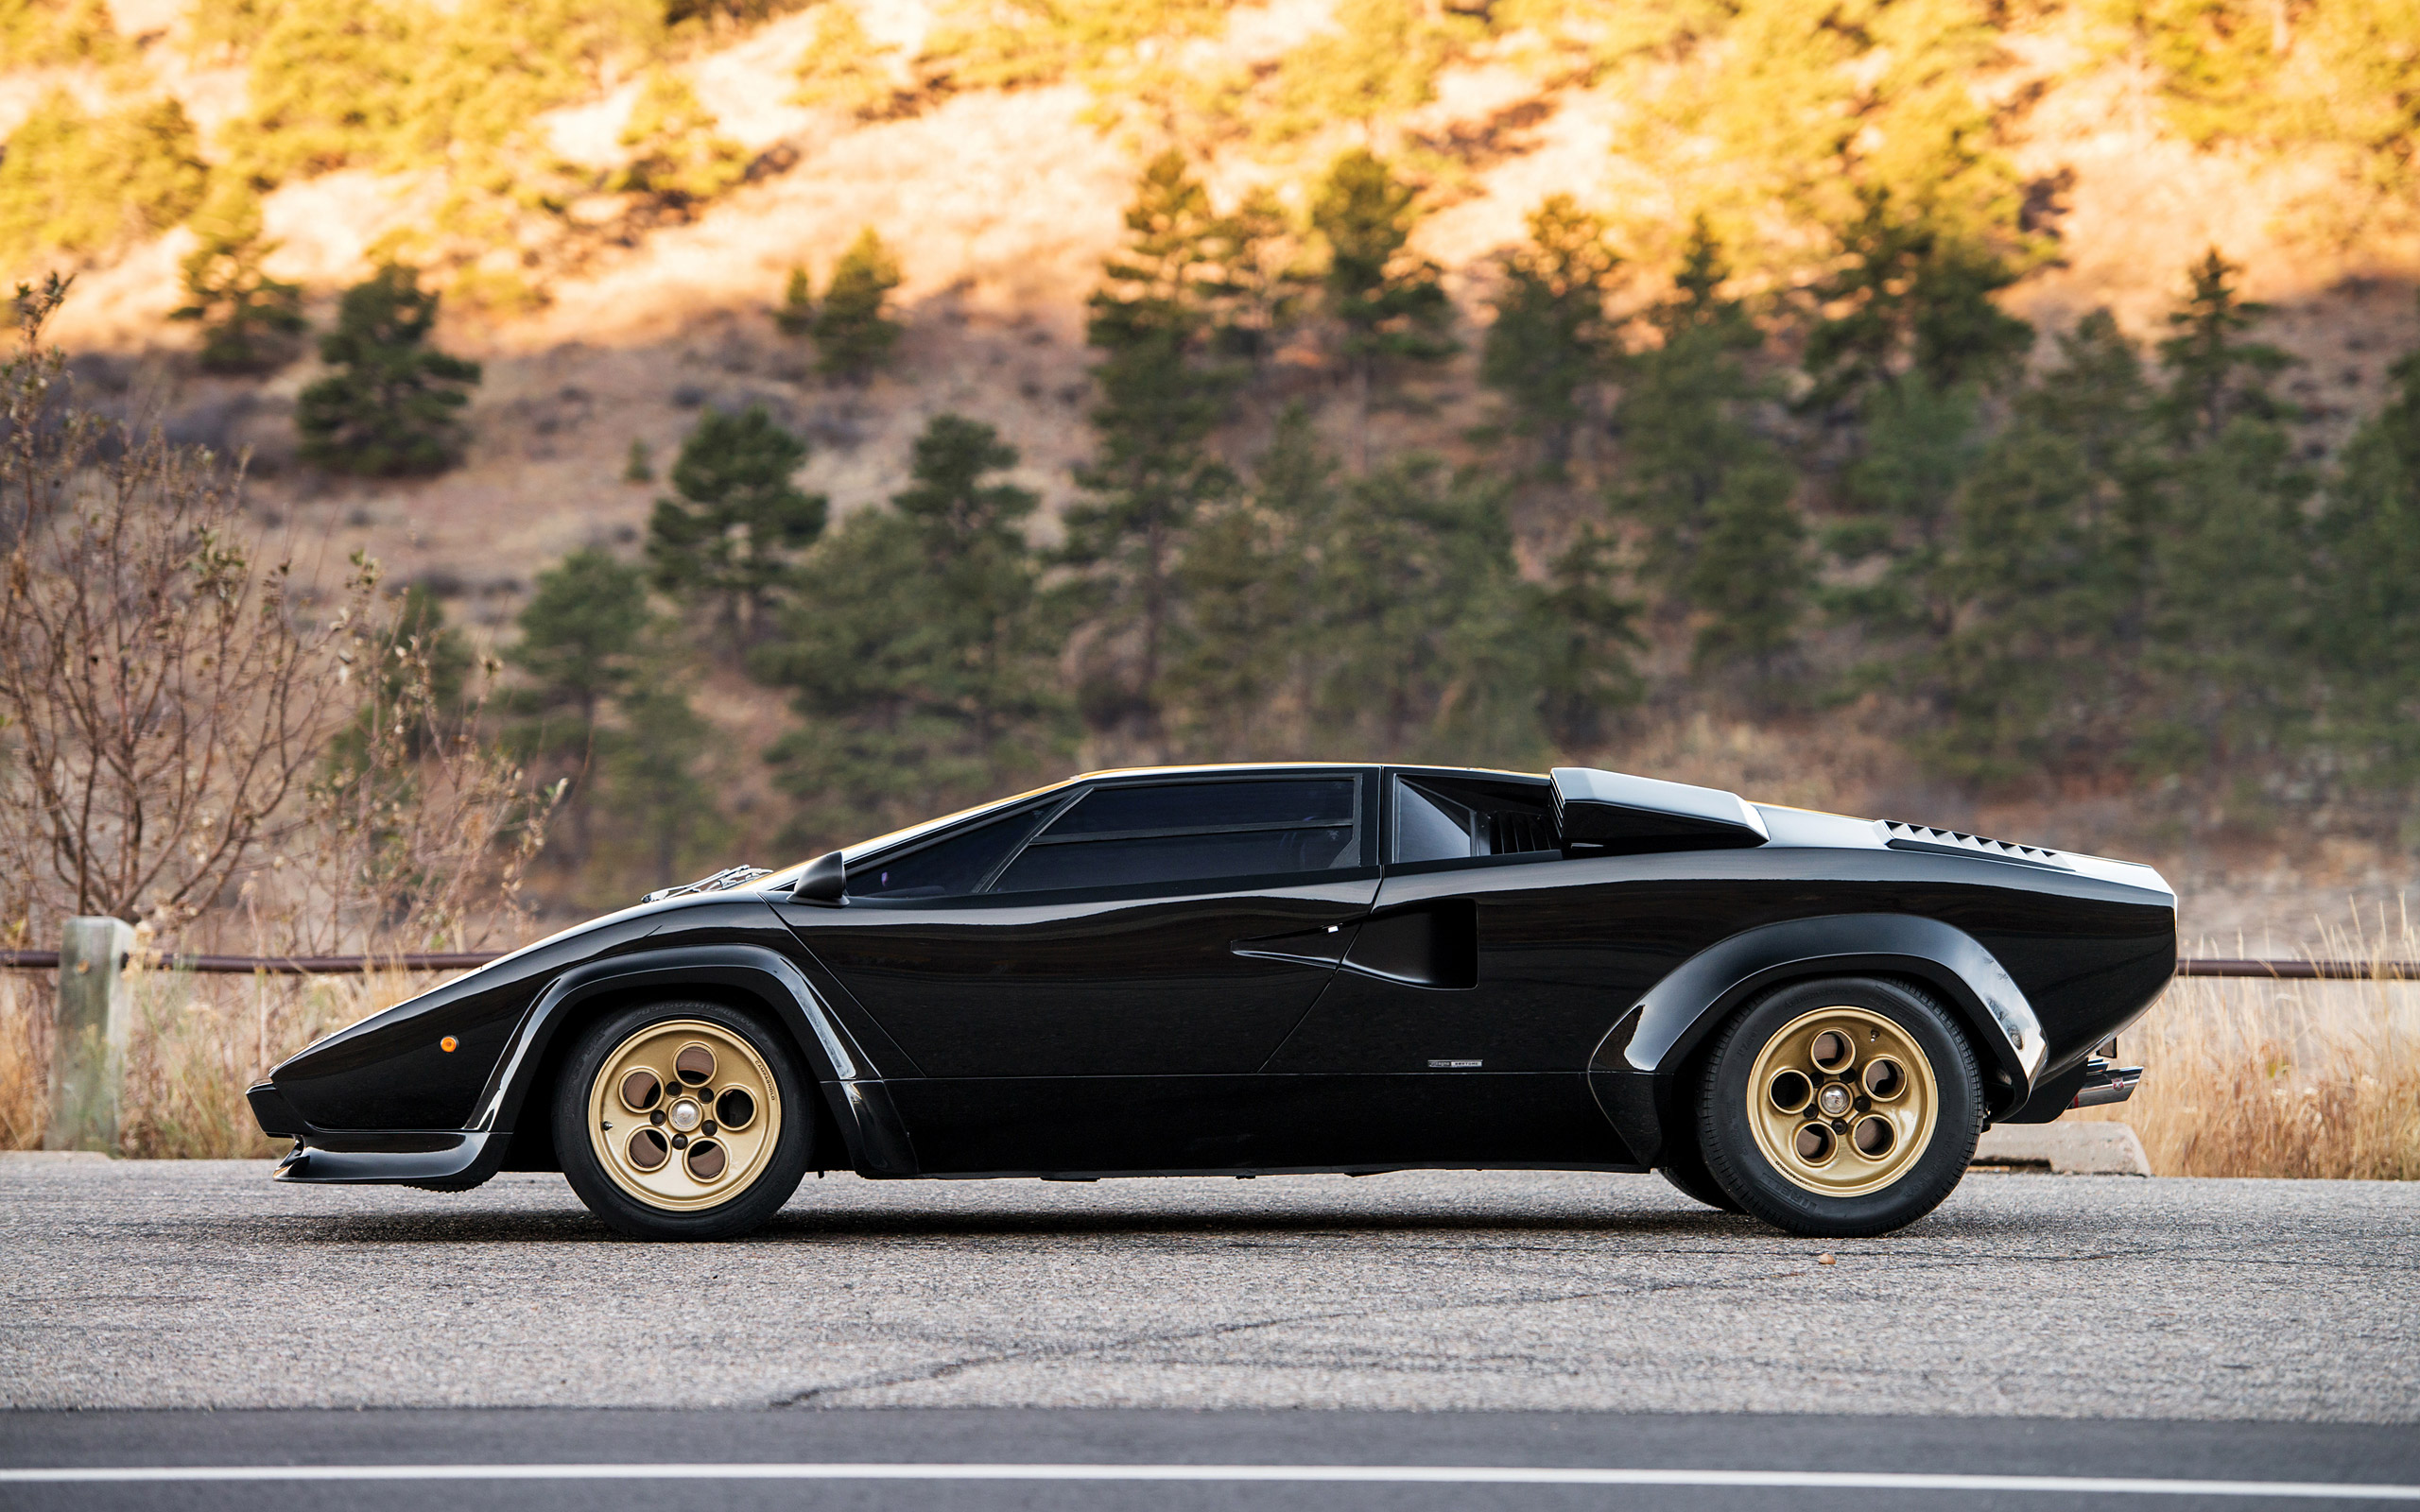 https://www.supercars.net/blog/wp-content/uploads/2020/12/1978-Lamborghini-Countach-LP400-S-003-1600.jpg